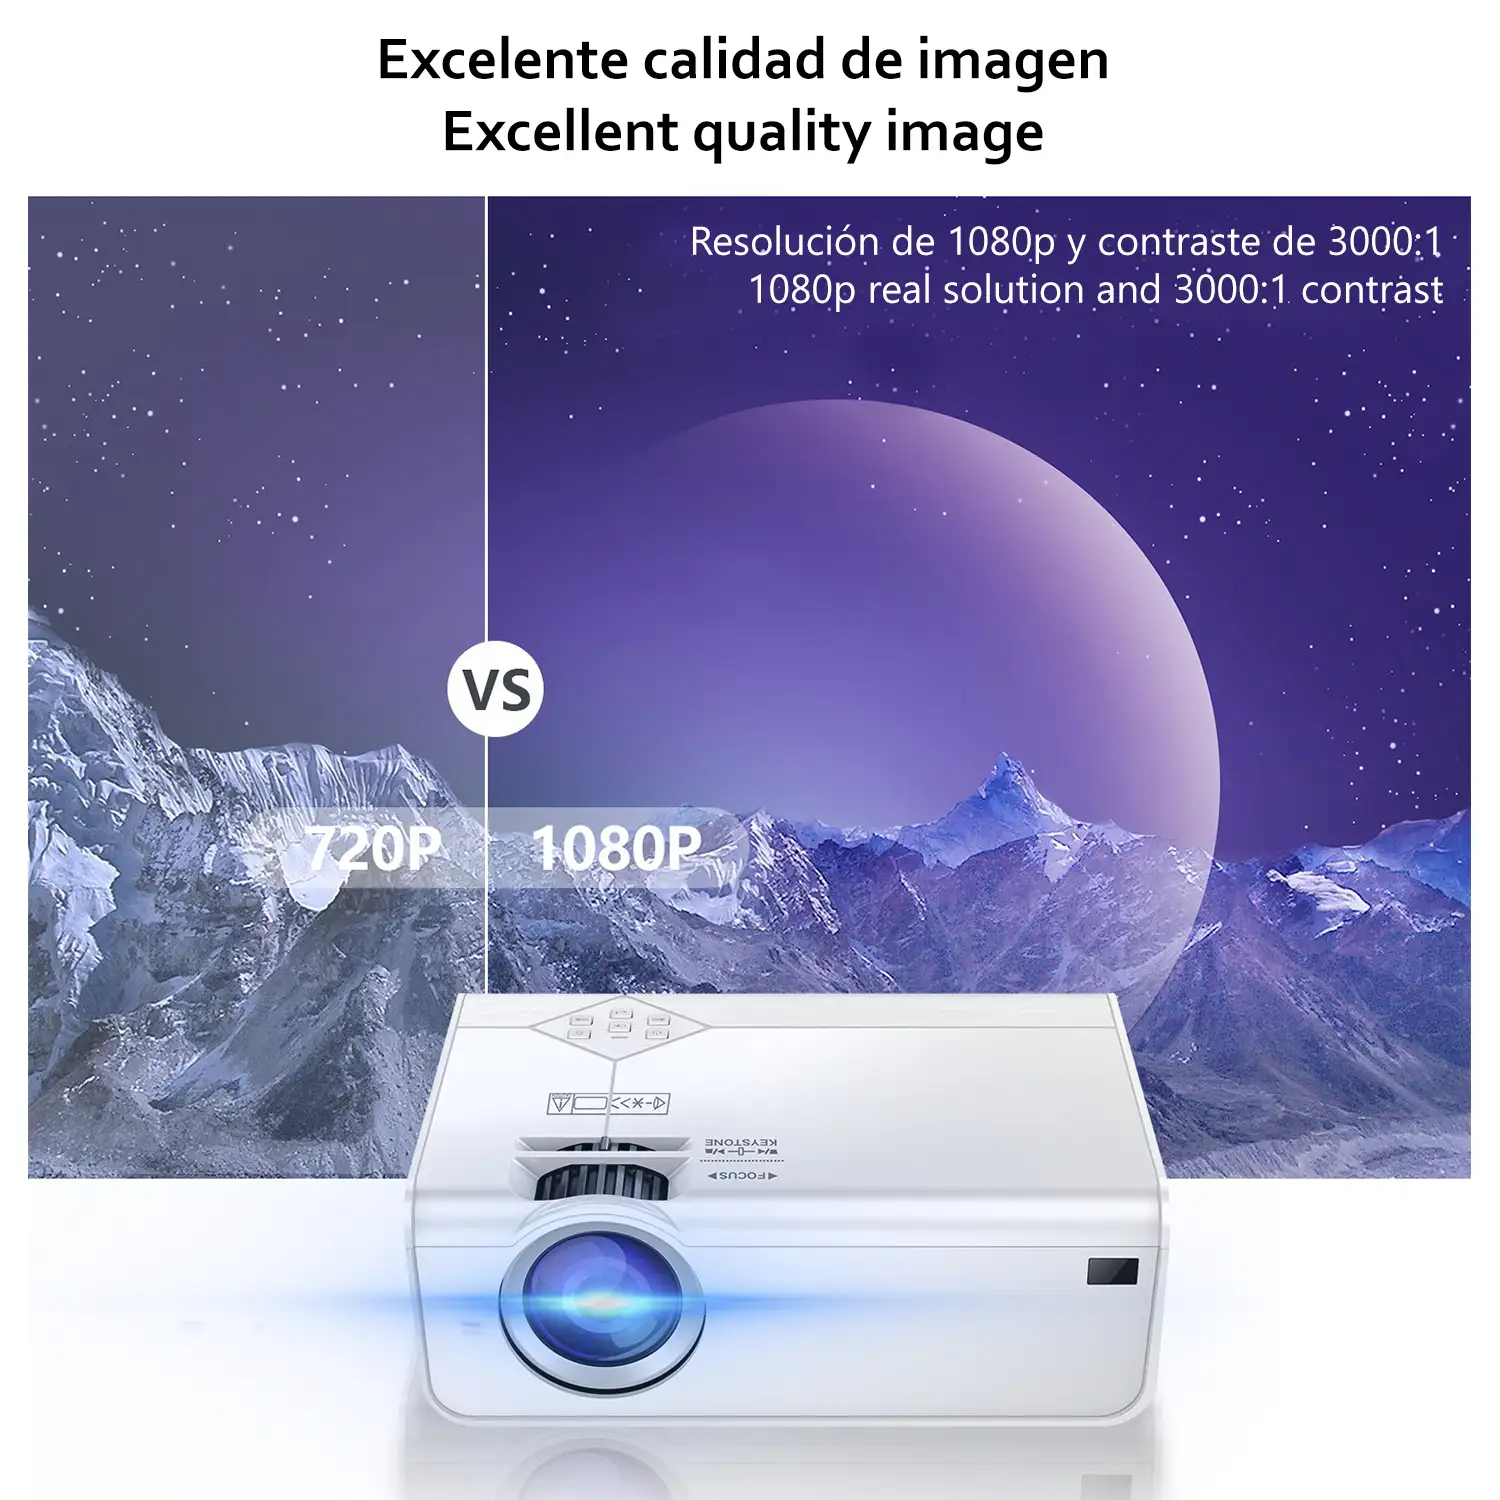 Video proyector LED A13 Full HD1080P, soporta 4K. De 27 a 200 pulgadas, brillo 8000 lm, altavoz incorporado.